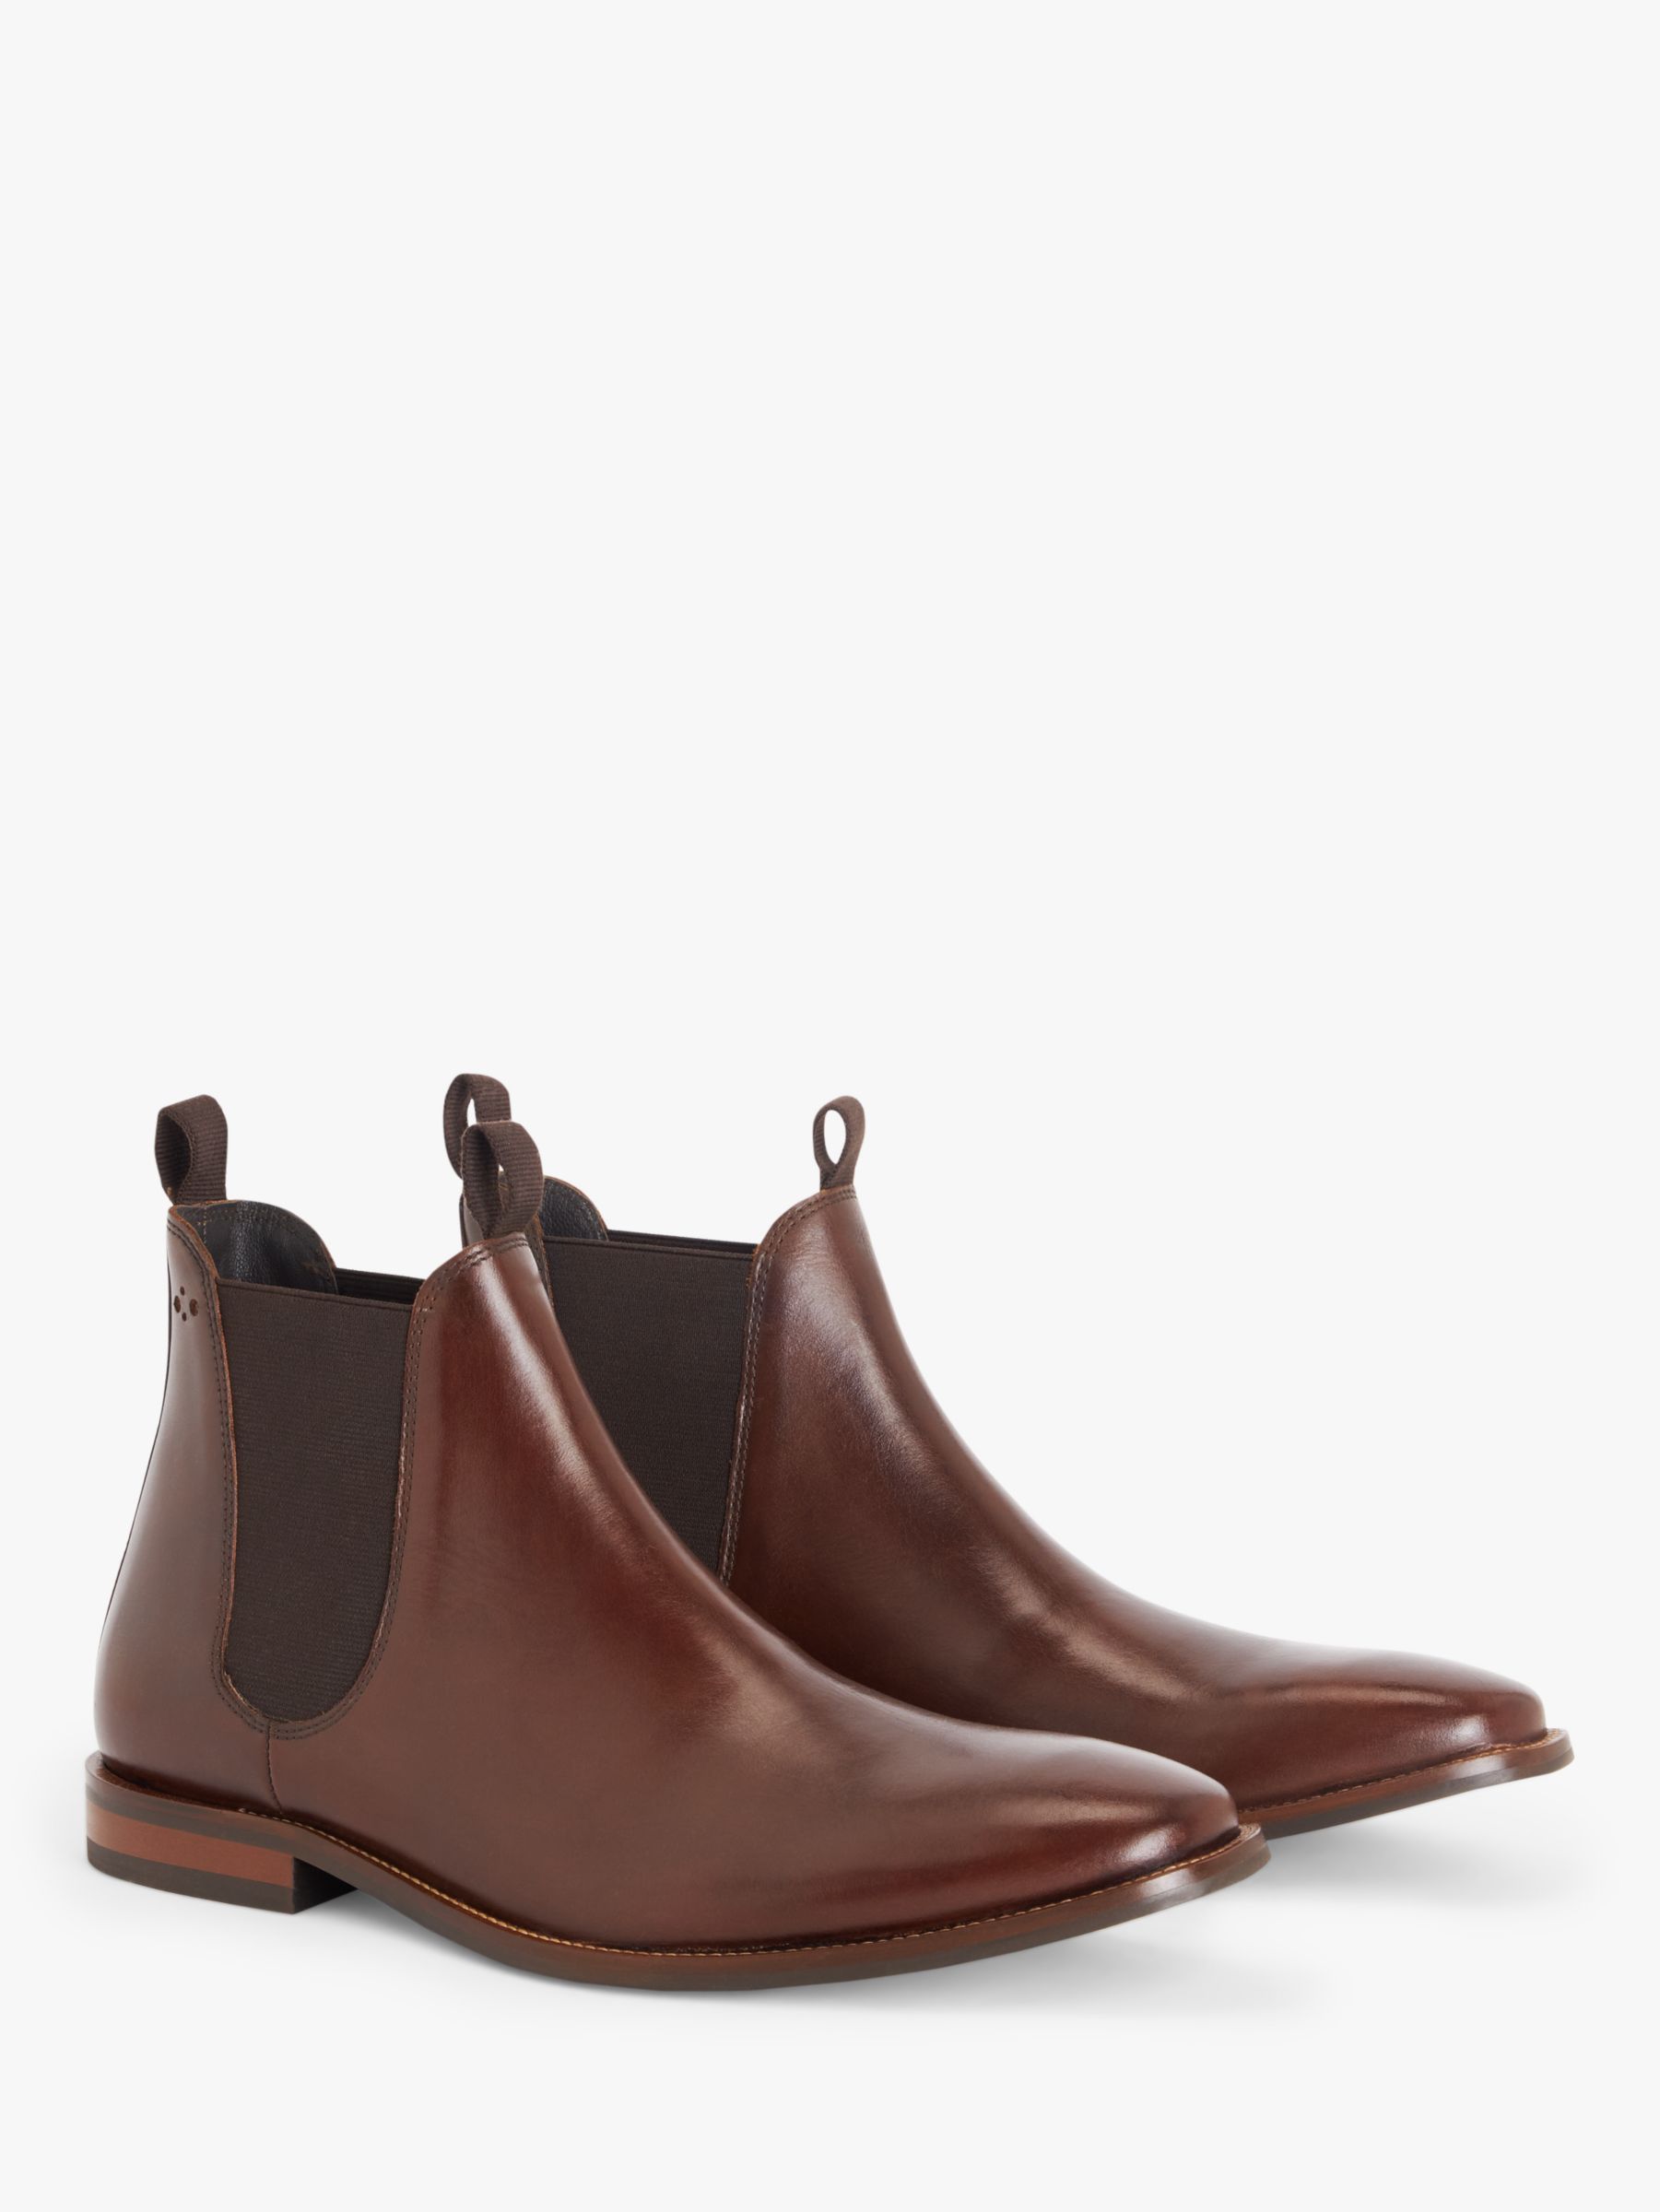 John Lewis Elsworth Leather Chelsea Boots, Dark Brown, 7